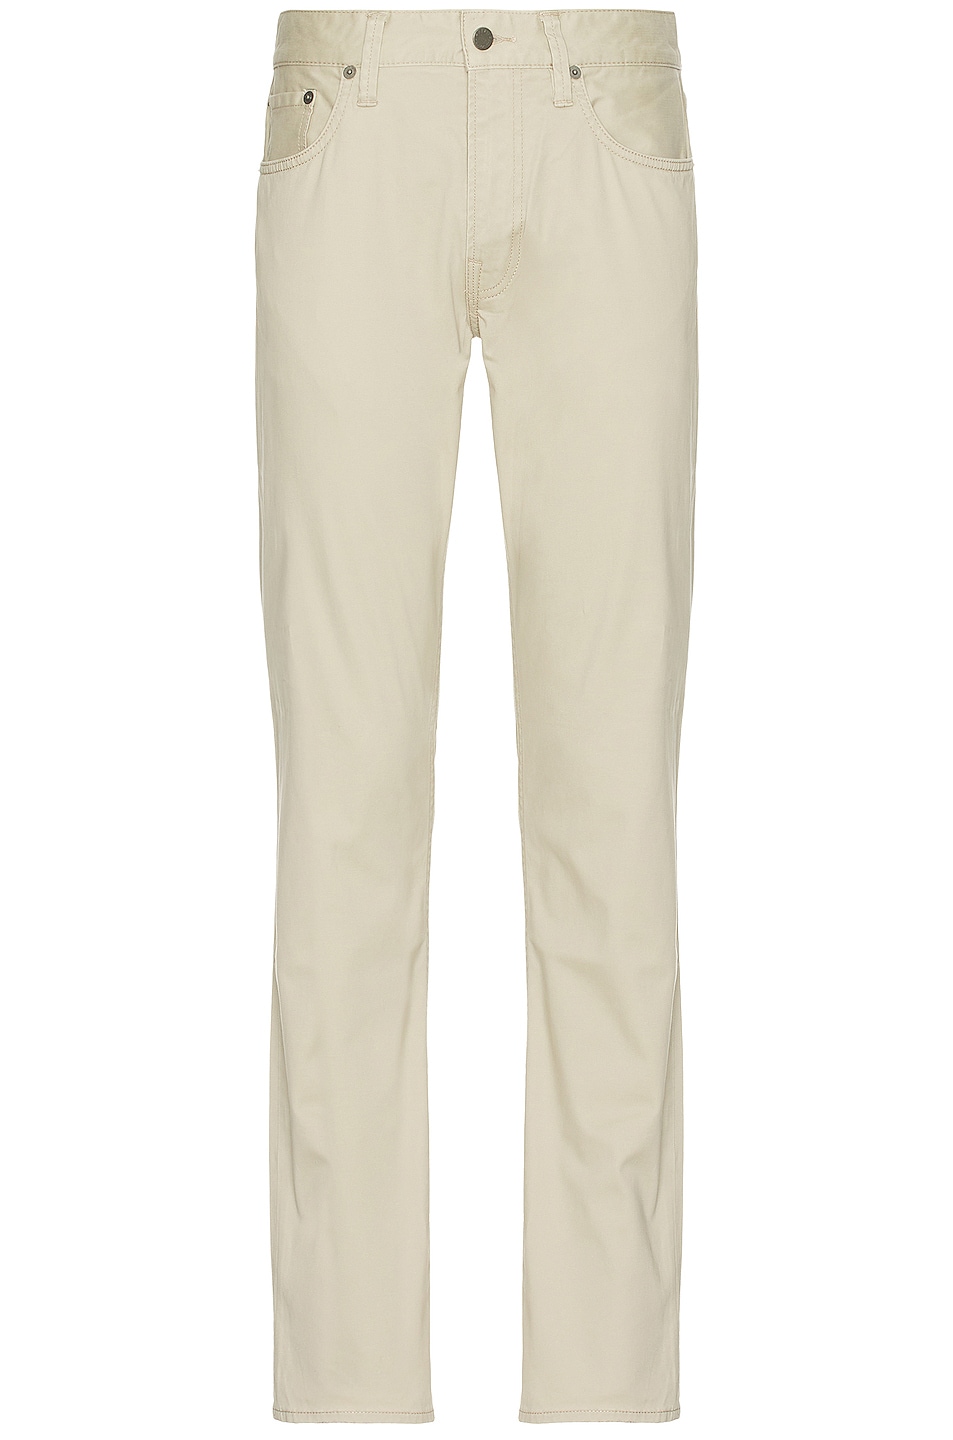 Image 1 of Polo Ralph Lauren 5 Pocket Sateen Chino Pant in Surplus Khaki